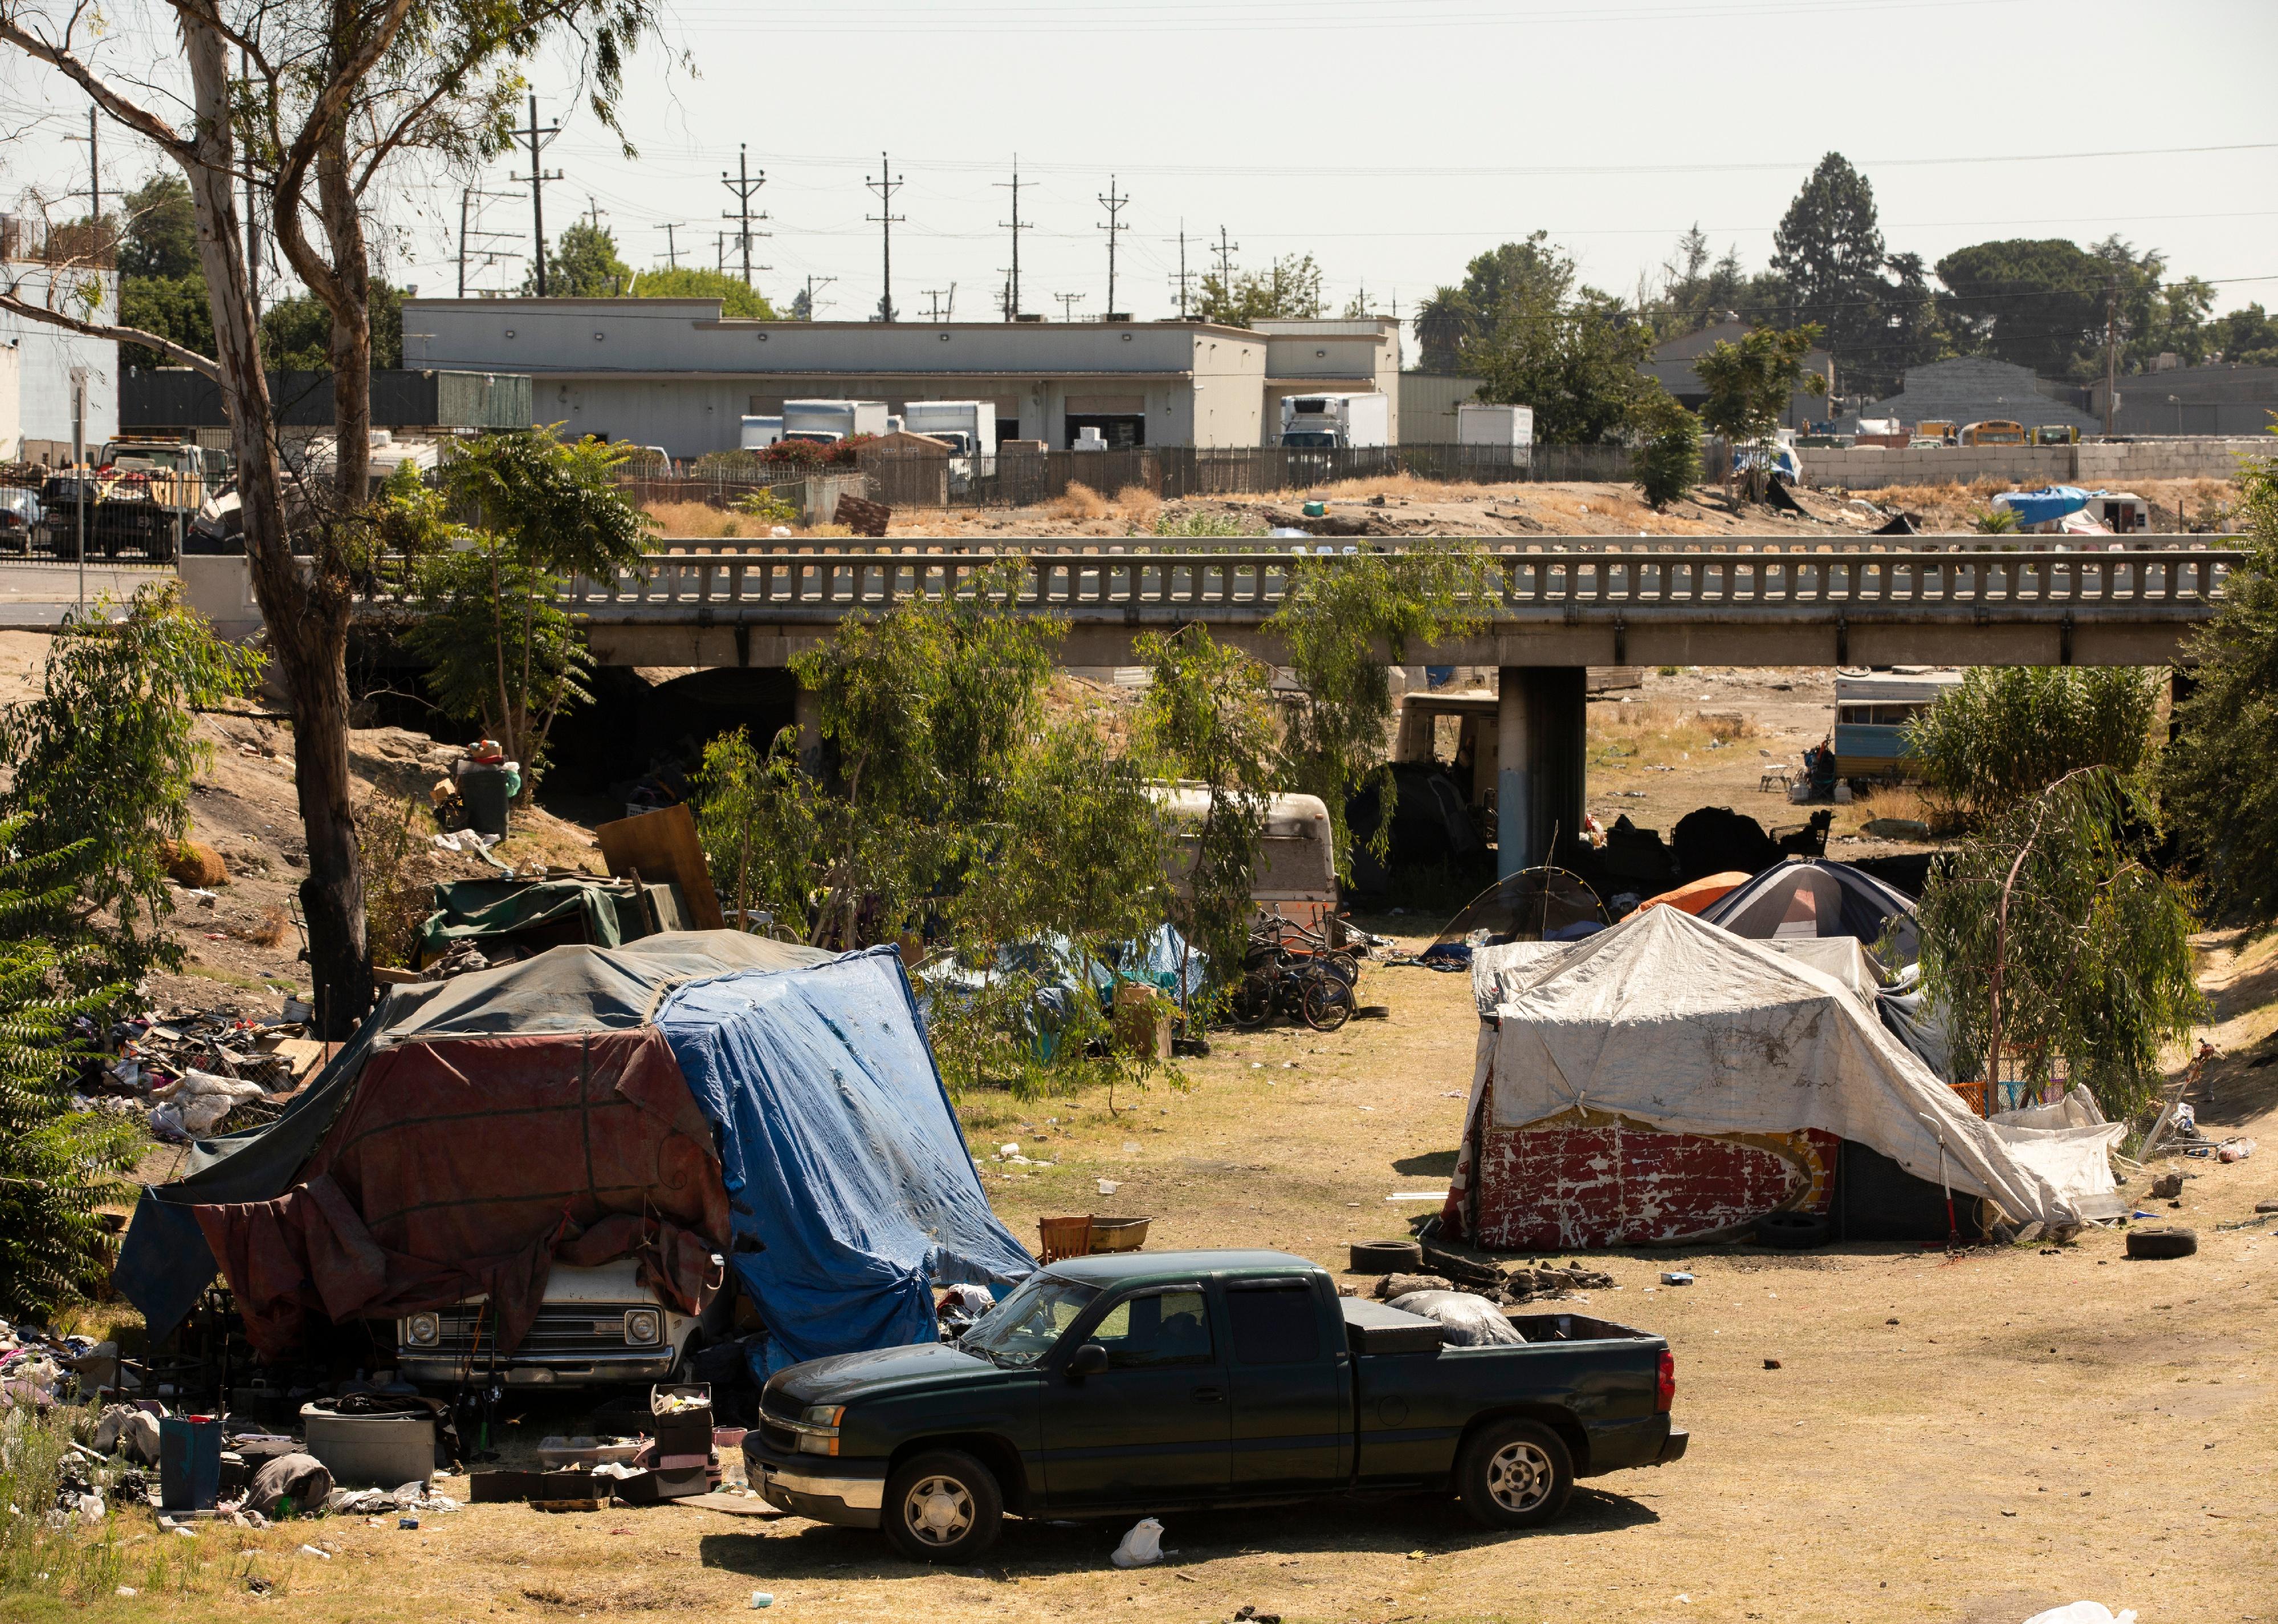 View of a homeless encampment in Stockton, California.